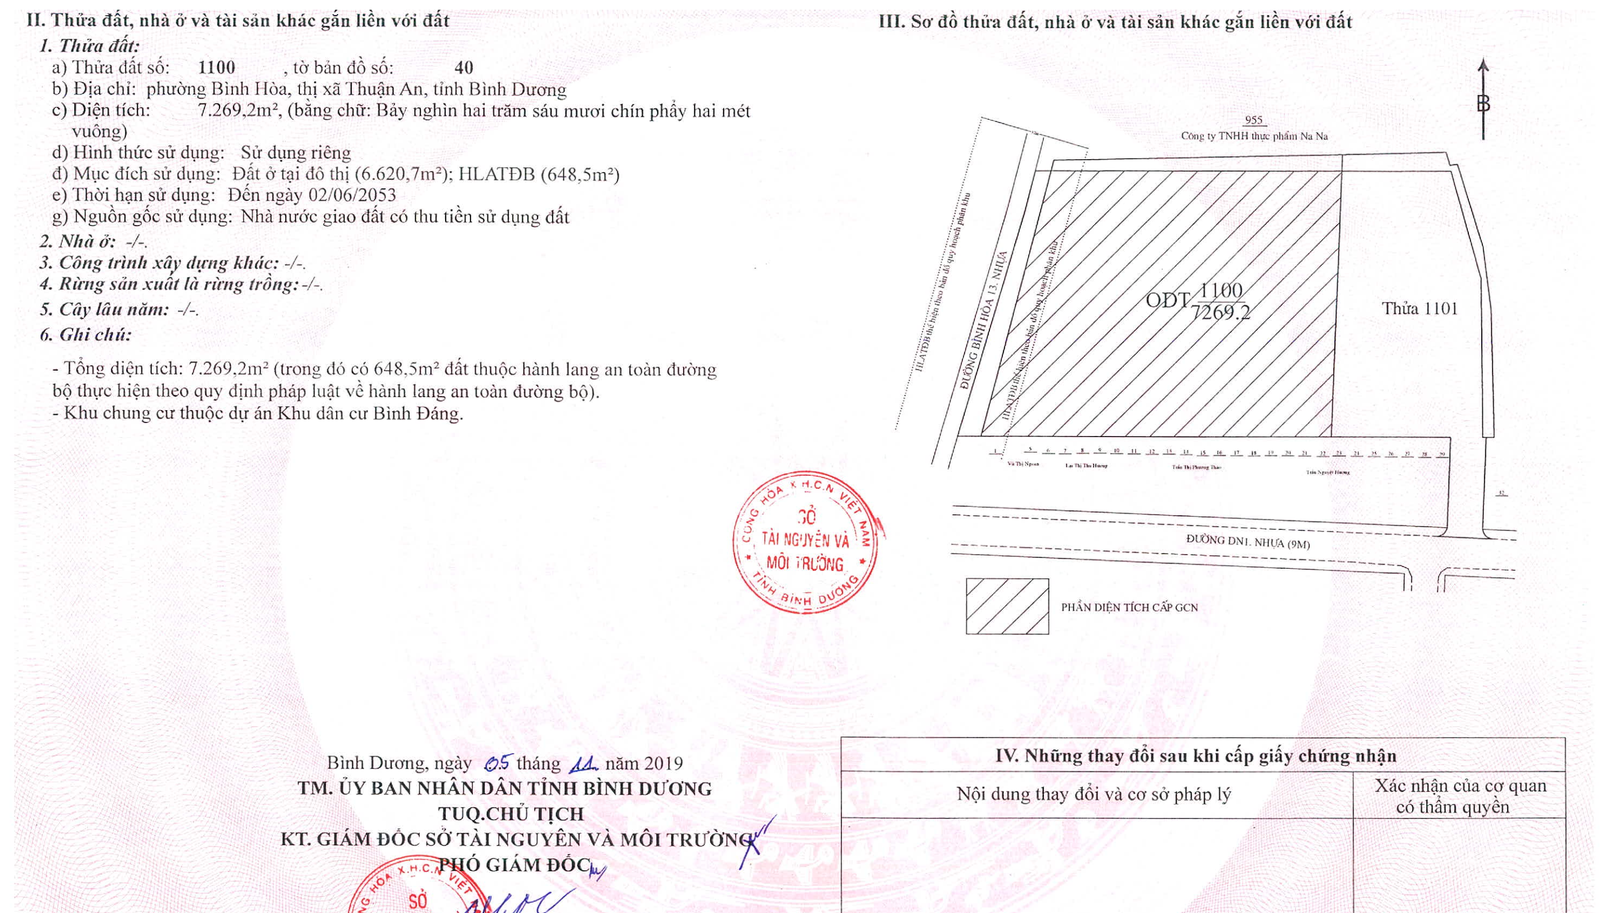 Pink book of Park View Thuan An Binh Duong project